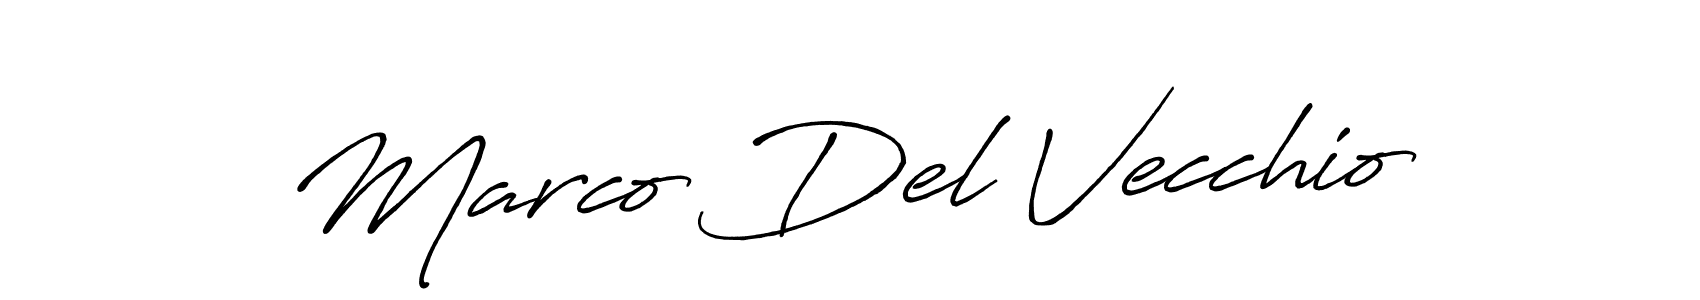 How to Draw Marco Del Vecchio signature style? Antro_Vectra_Bolder is a latest design signature styles for name Marco Del Vecchio. Marco Del Vecchio signature style 7 images and pictures png